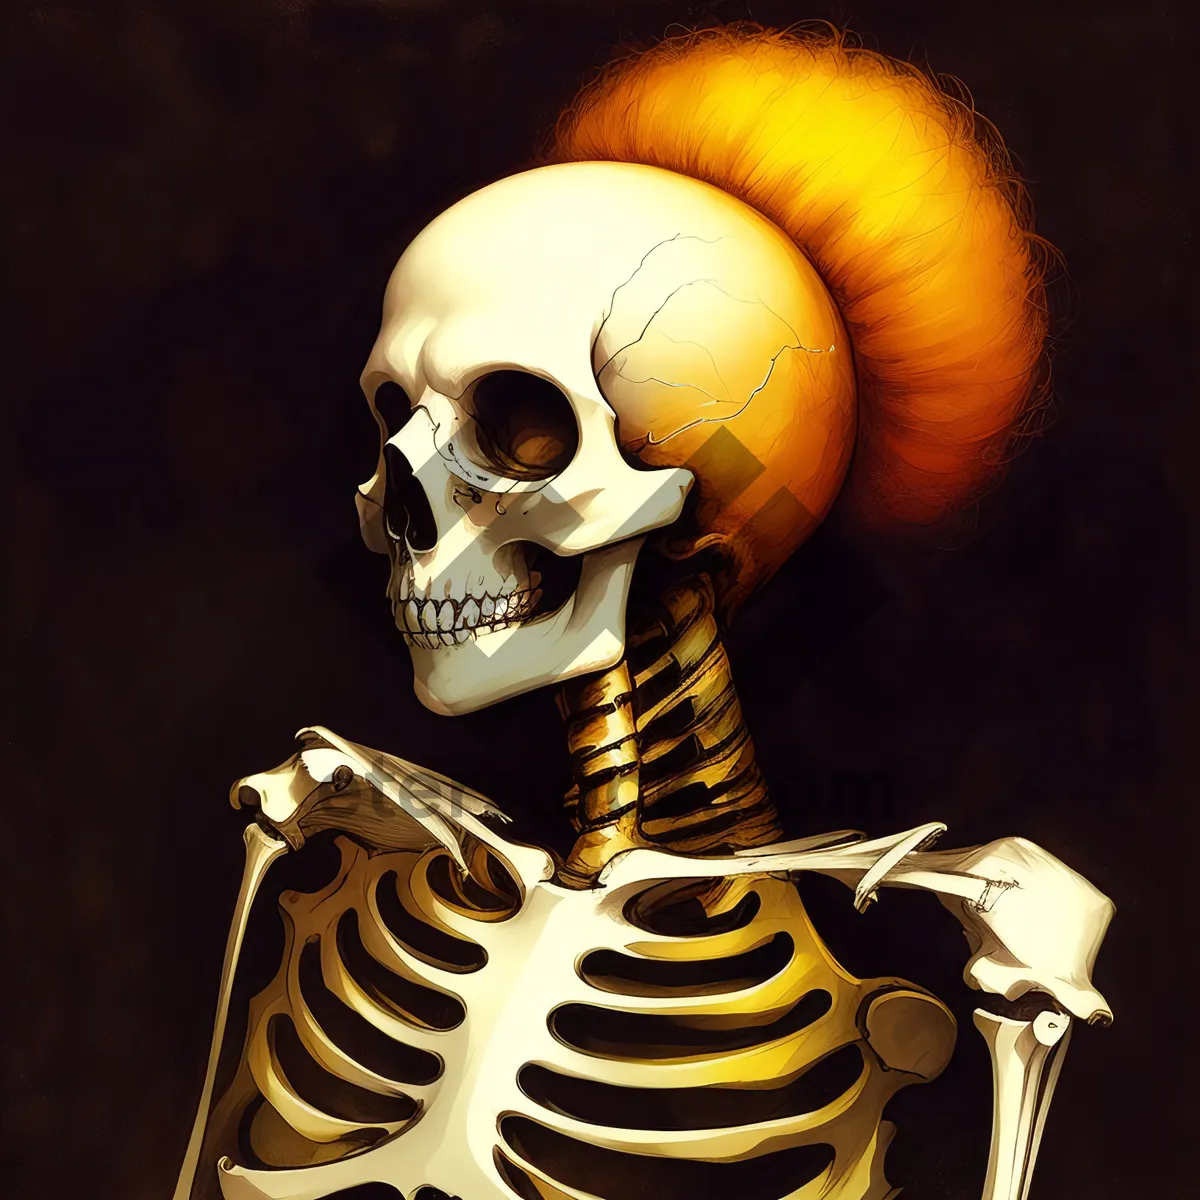 Picture of Spooky Skeletal Sculpture of Human Skull